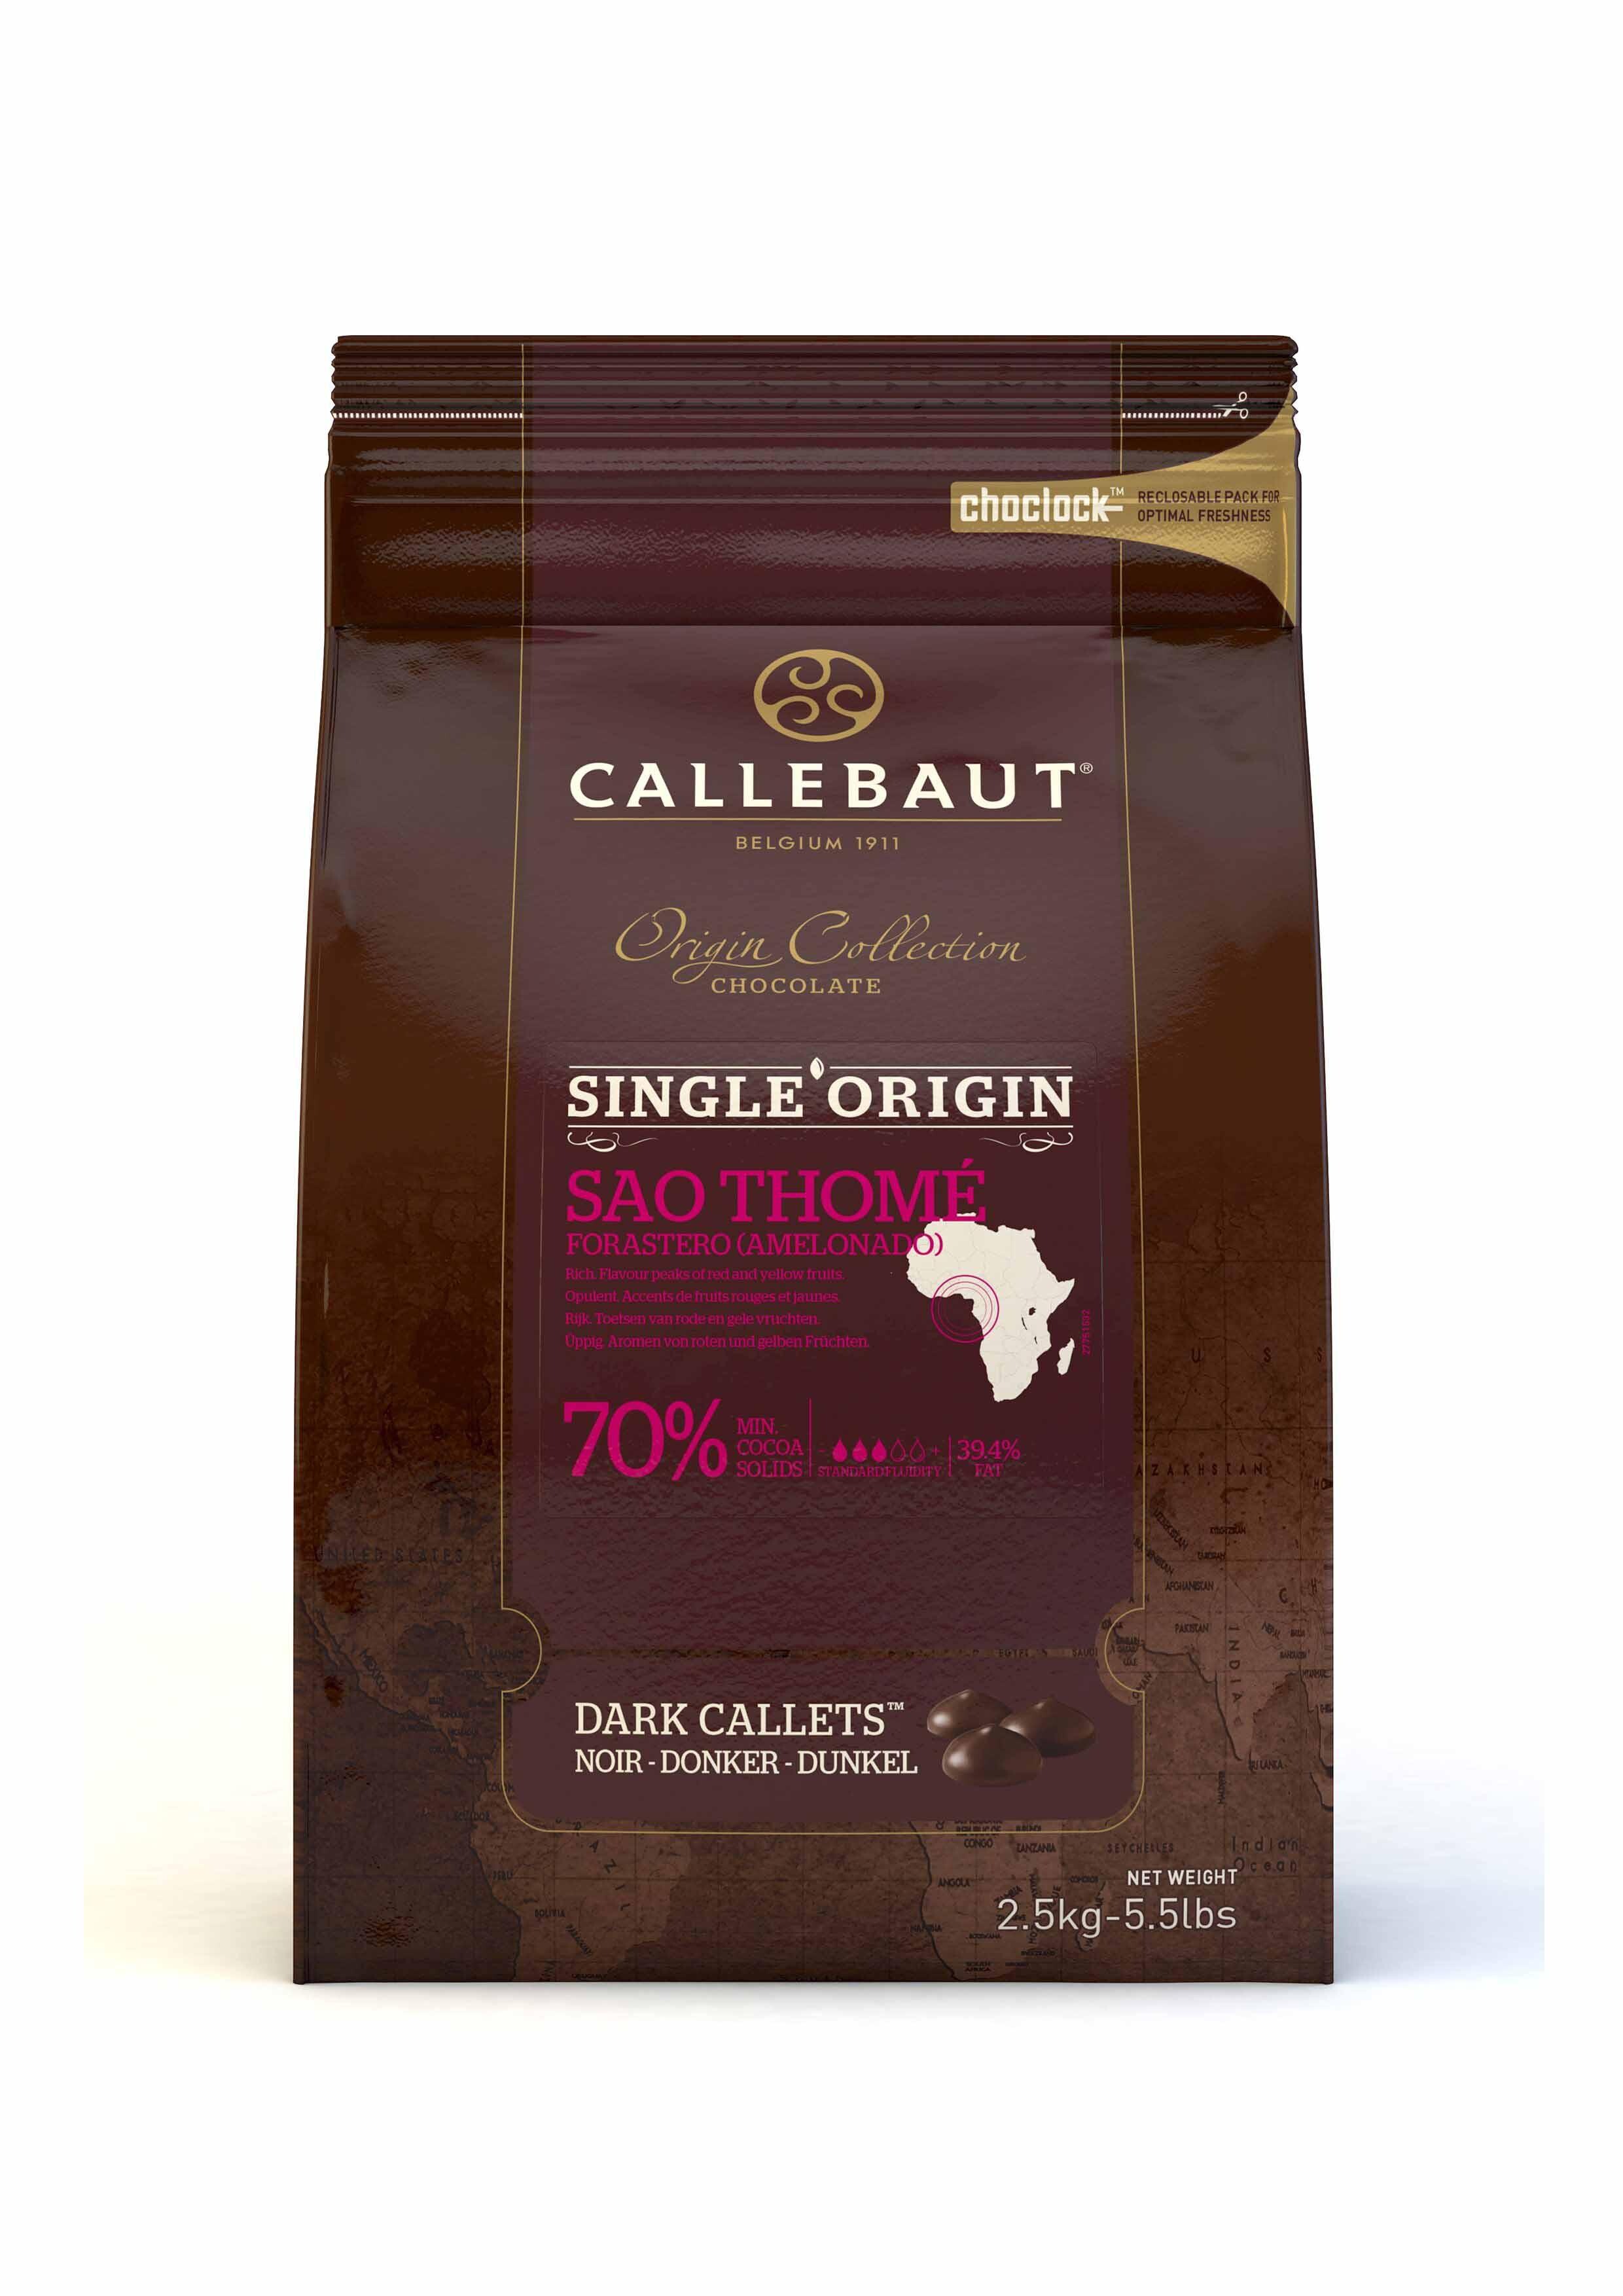 Barry Callebaut Origine Chocolate callets dark Sao Thomé 2,5kg 5.5lbs